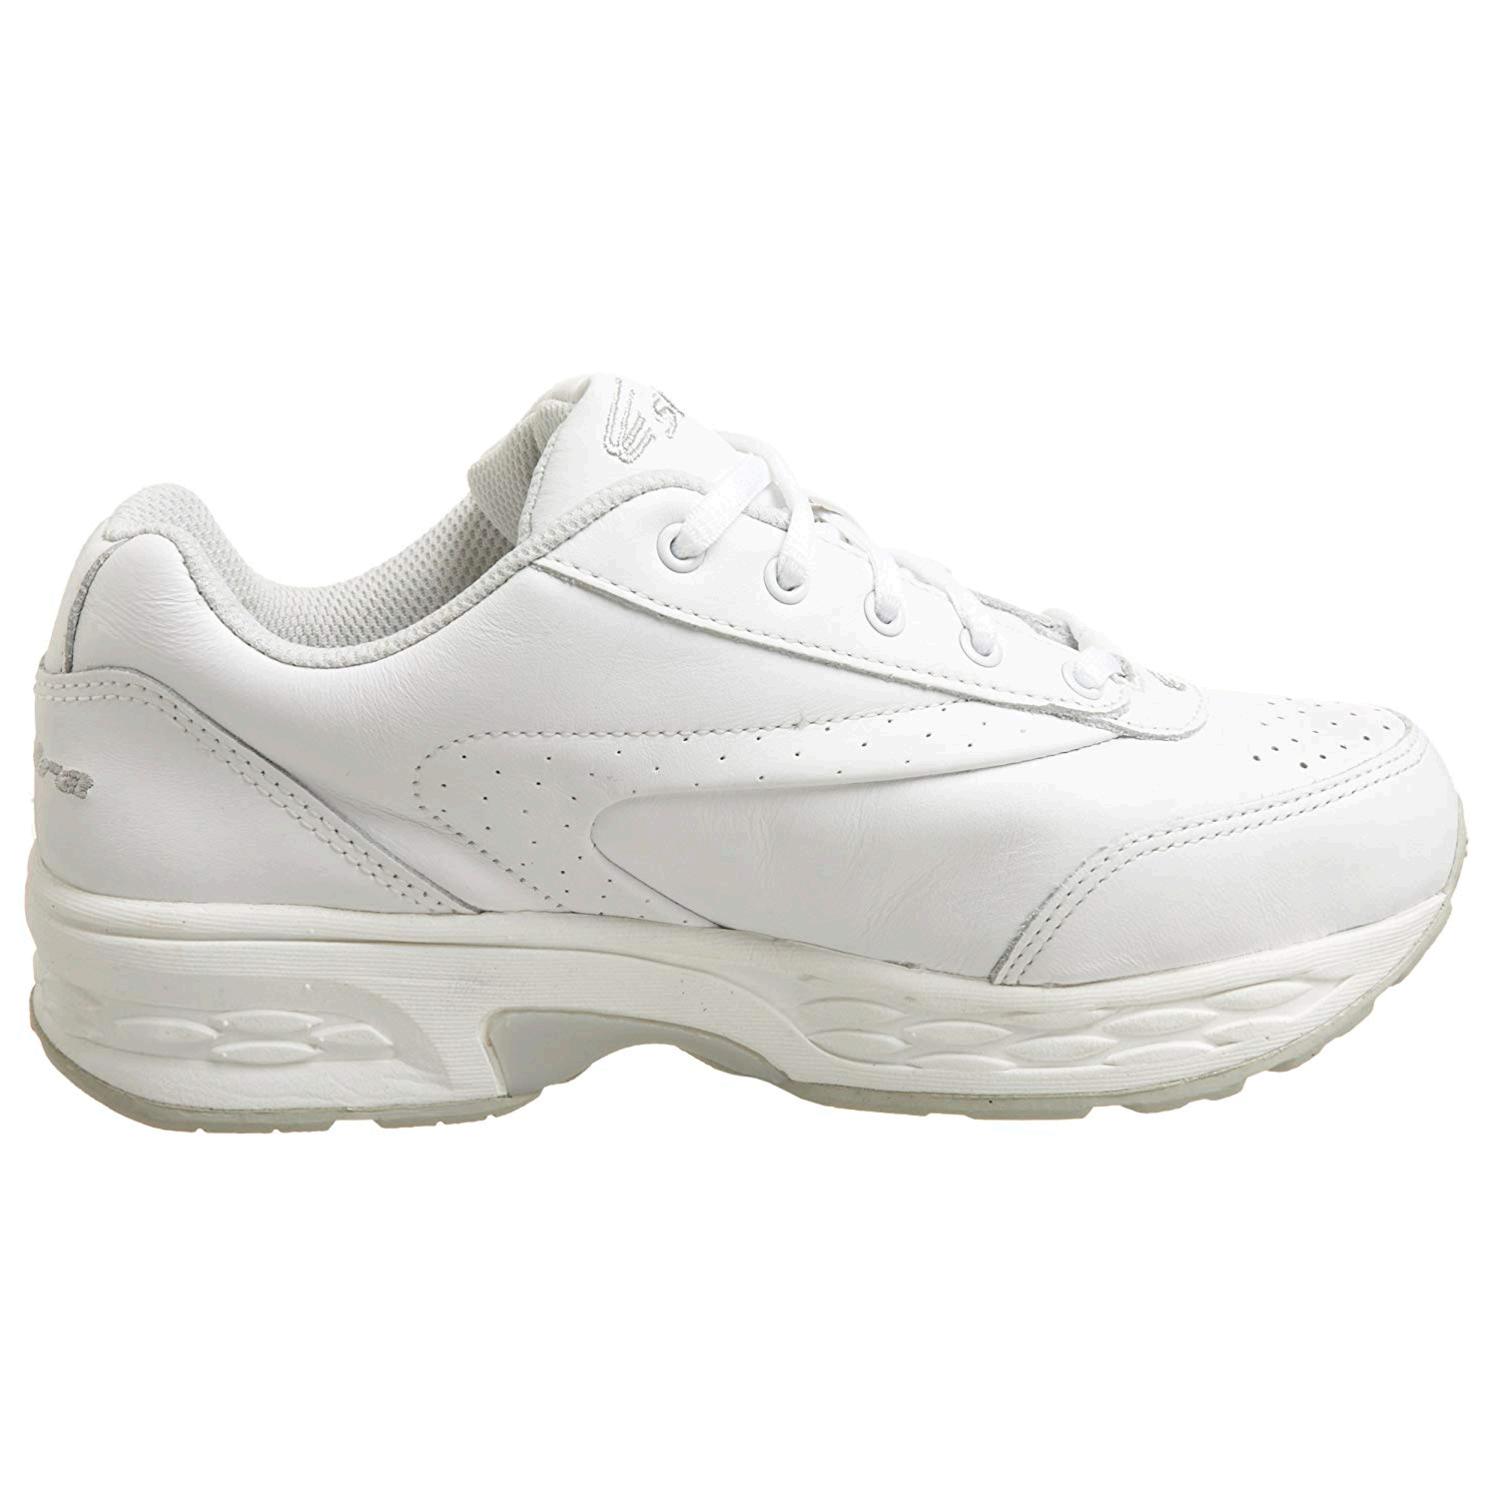 SPIRA Women's Classic Leather Walking Shoe, White/White, Size 9.0 CusJ ...